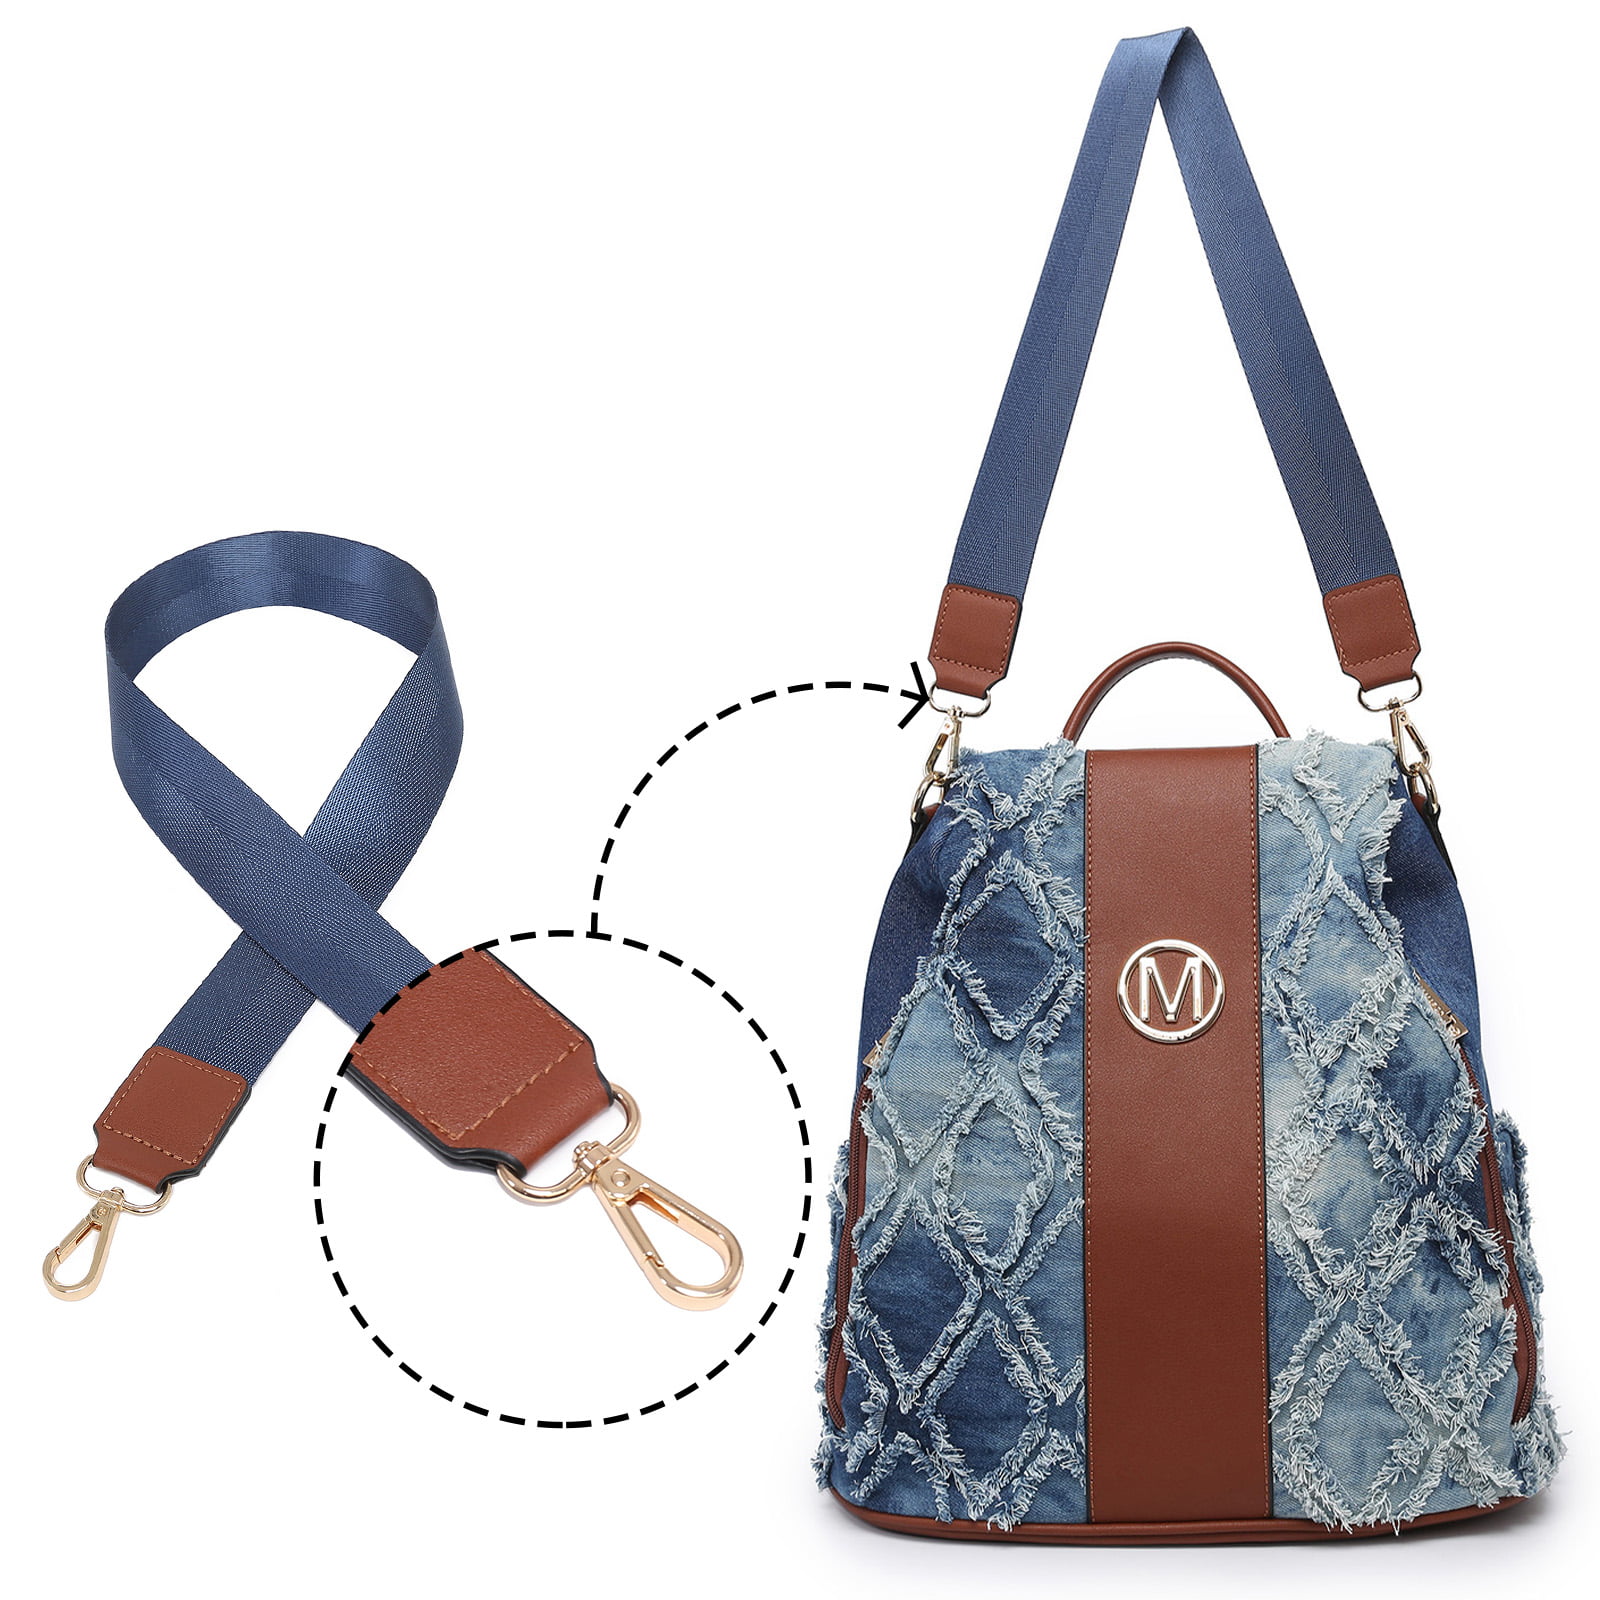 MKP Woman Fashion Backpacks Handbags Anti-Theft Travel School Bags Shoulder  Purse Wallet Set 2pcs 